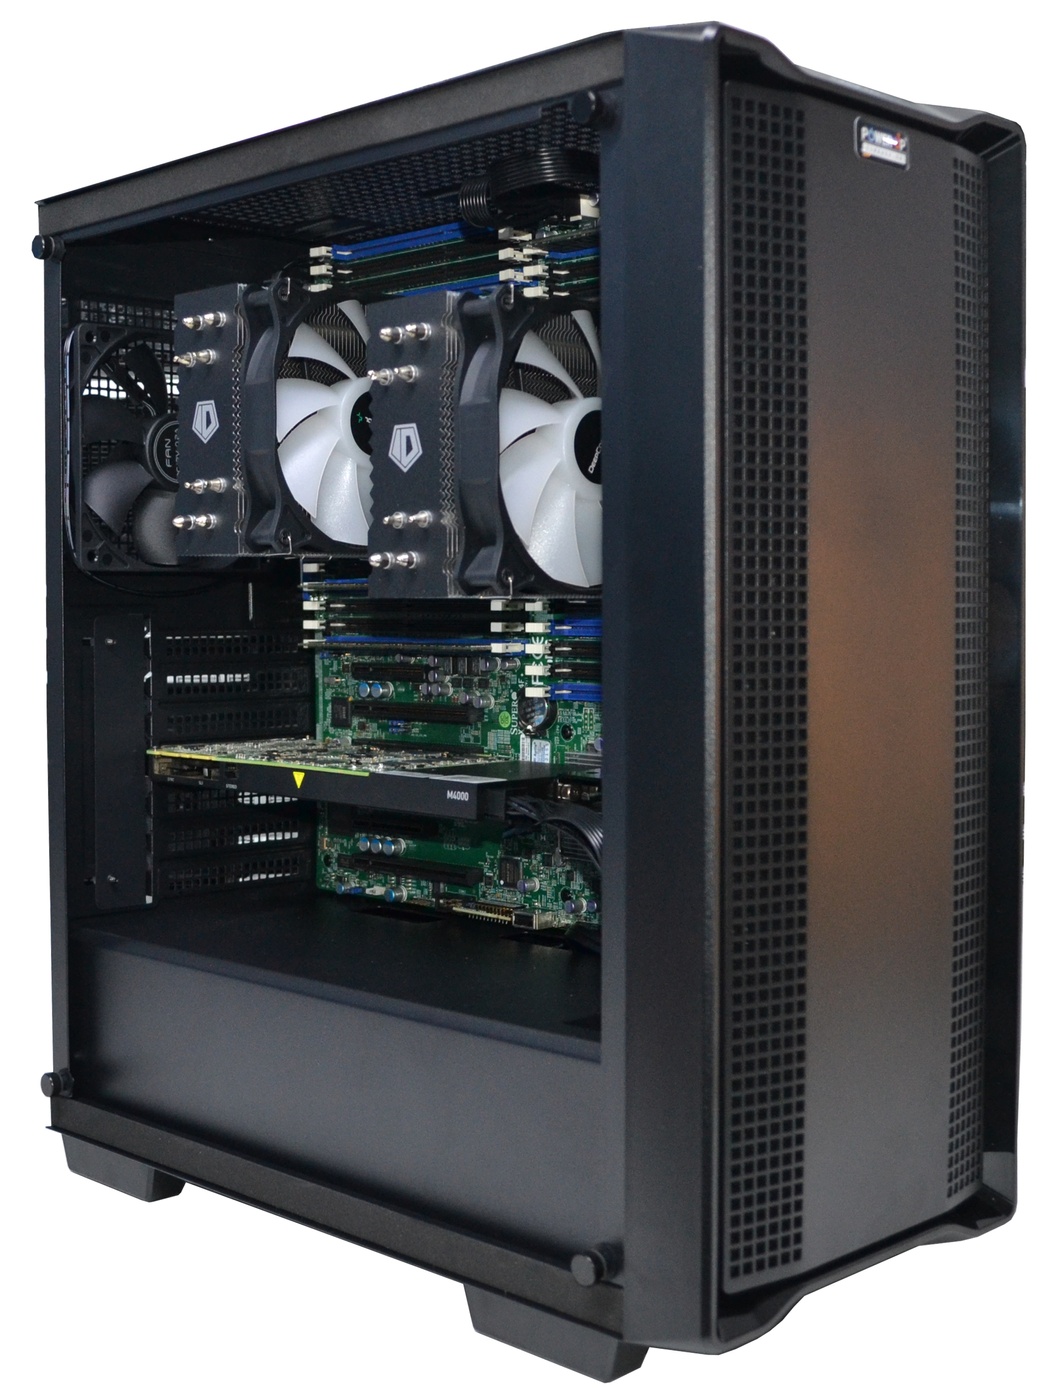 Двухпроцессорная рабочая станция PowerUp #202 Xeon E5 2670 v2 x2/32 GB/SSD 256GB/NVIDIA Quadro M4000 8GB